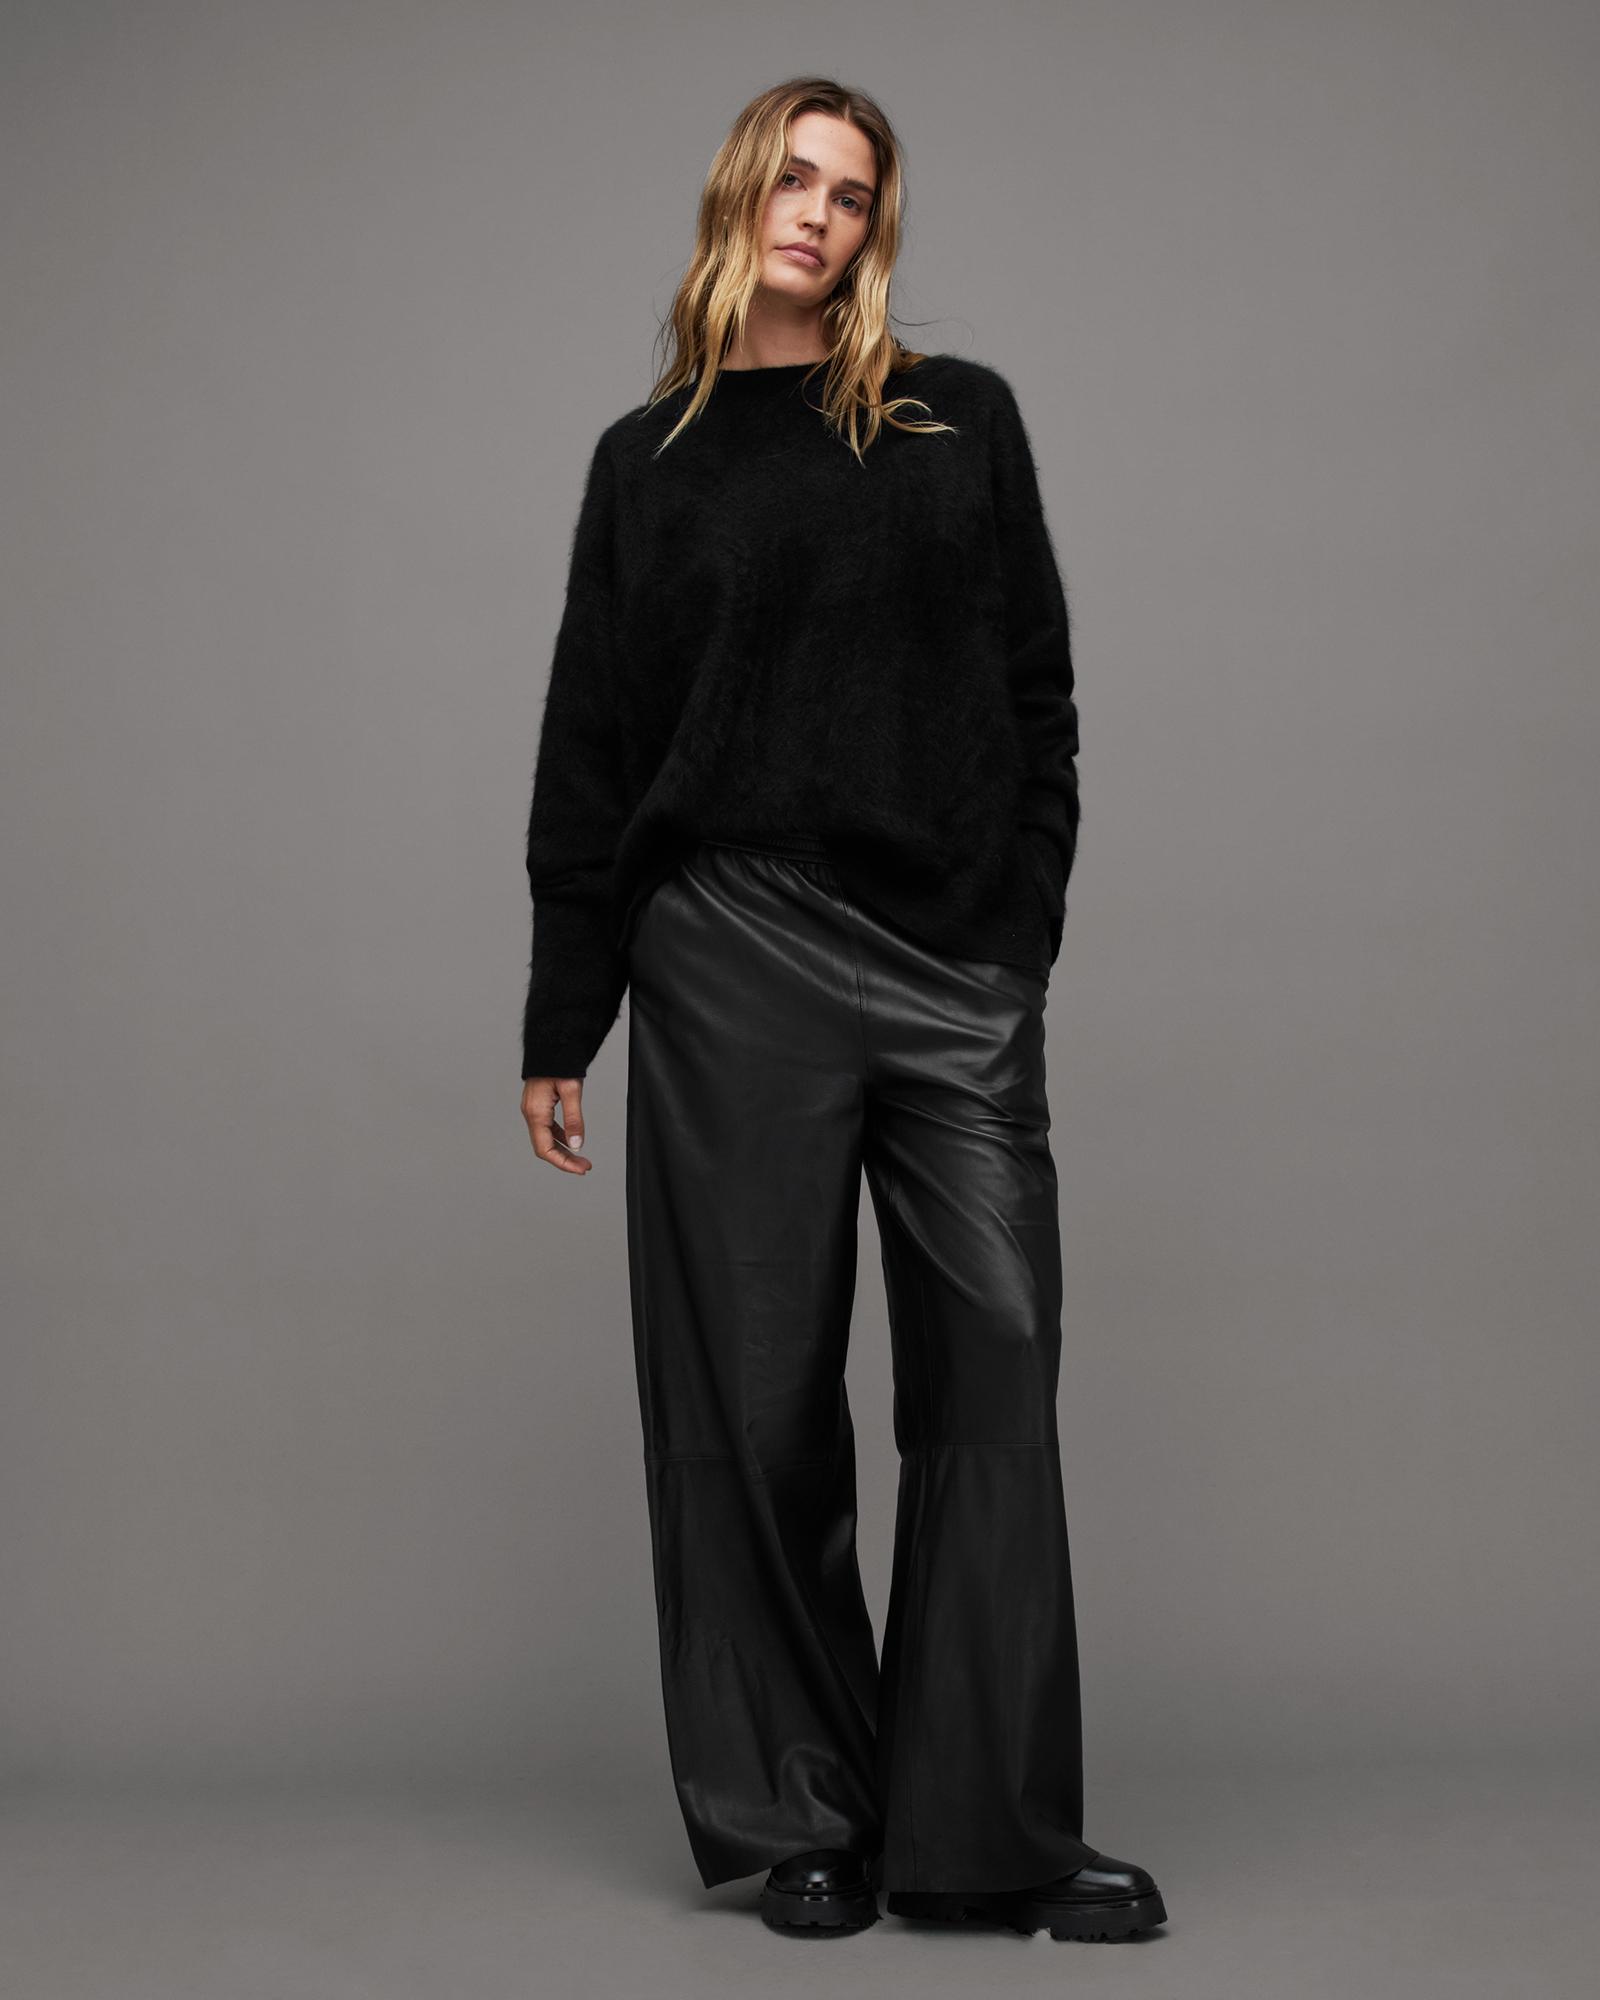 Cora Leather Look High-Rise Leggings Black